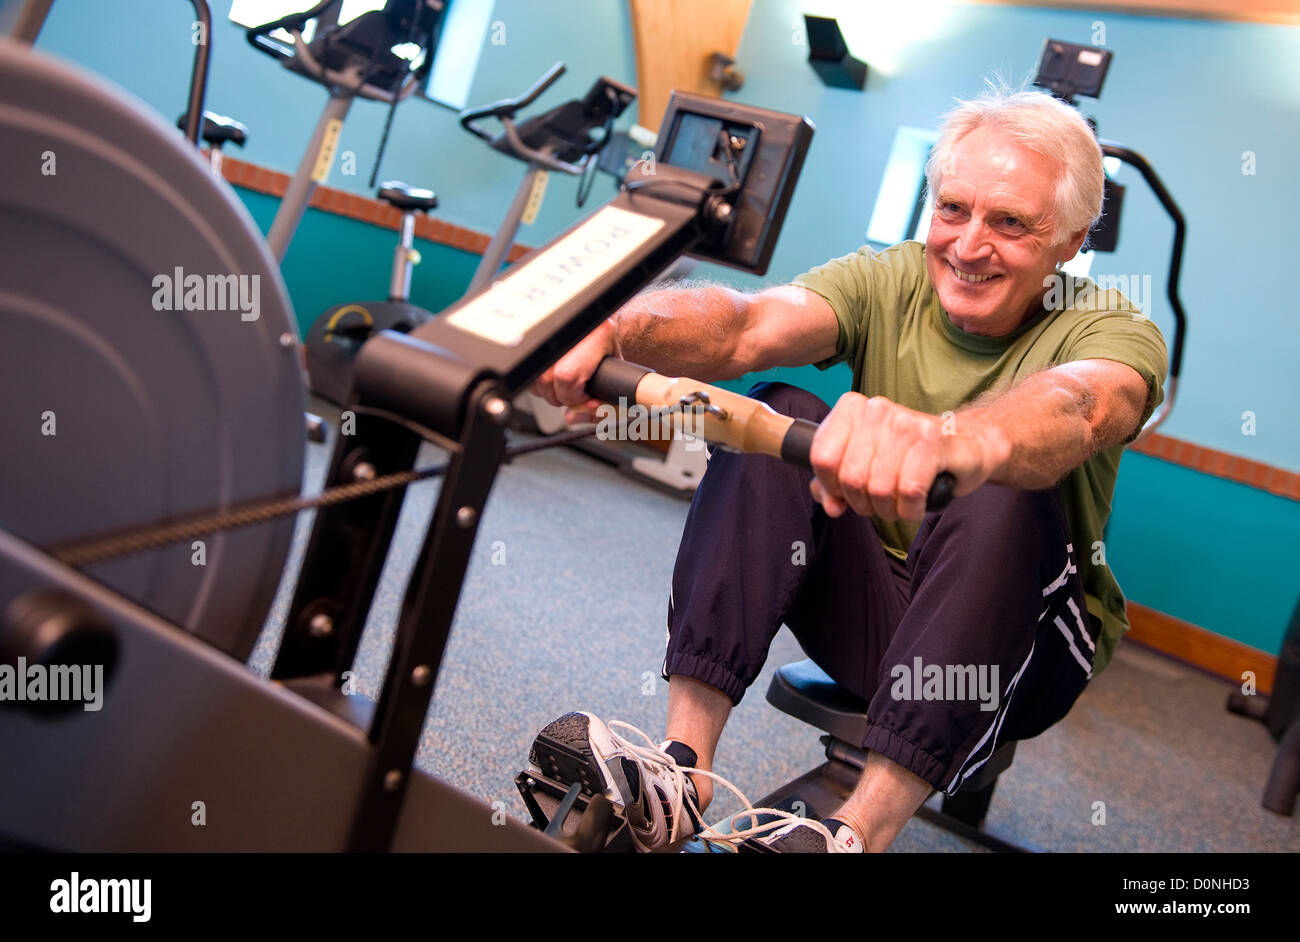 senior male using rowing machine in gym Stock Photo